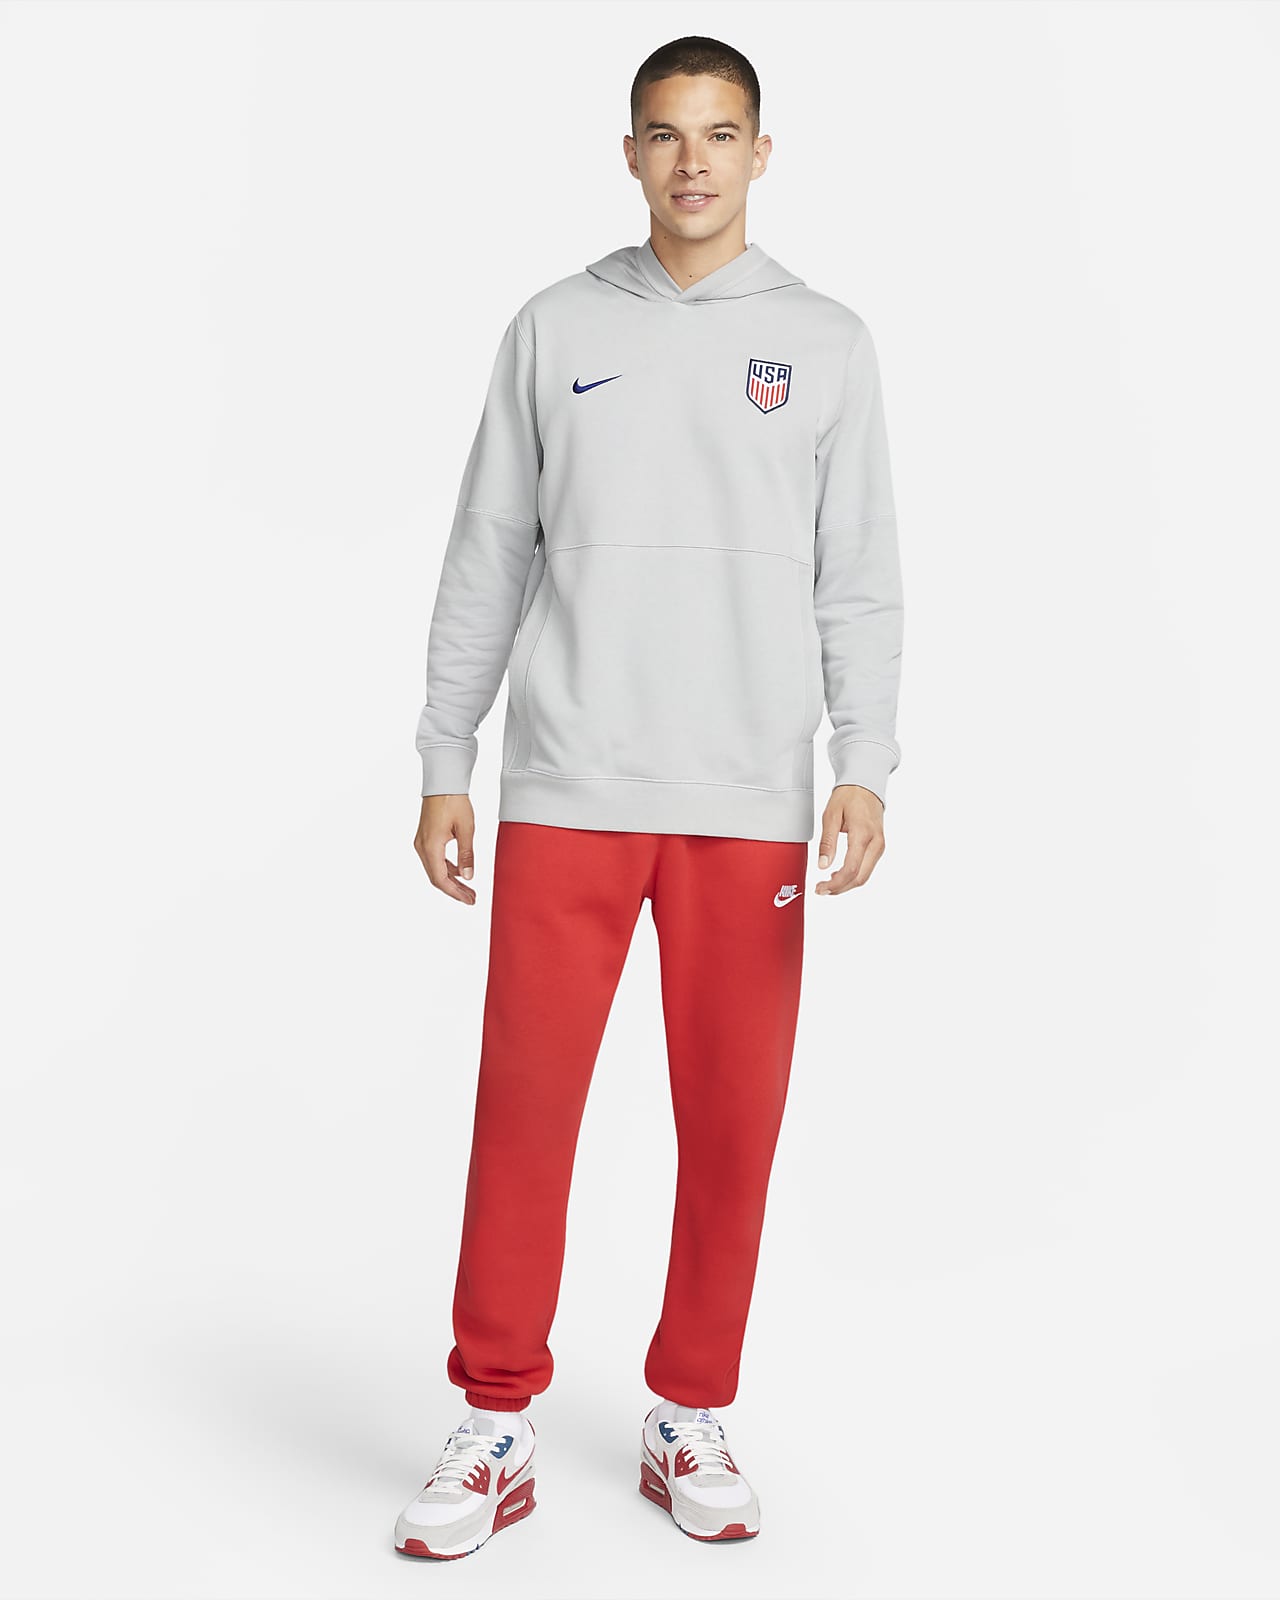 U.S. Men's French Nike.com